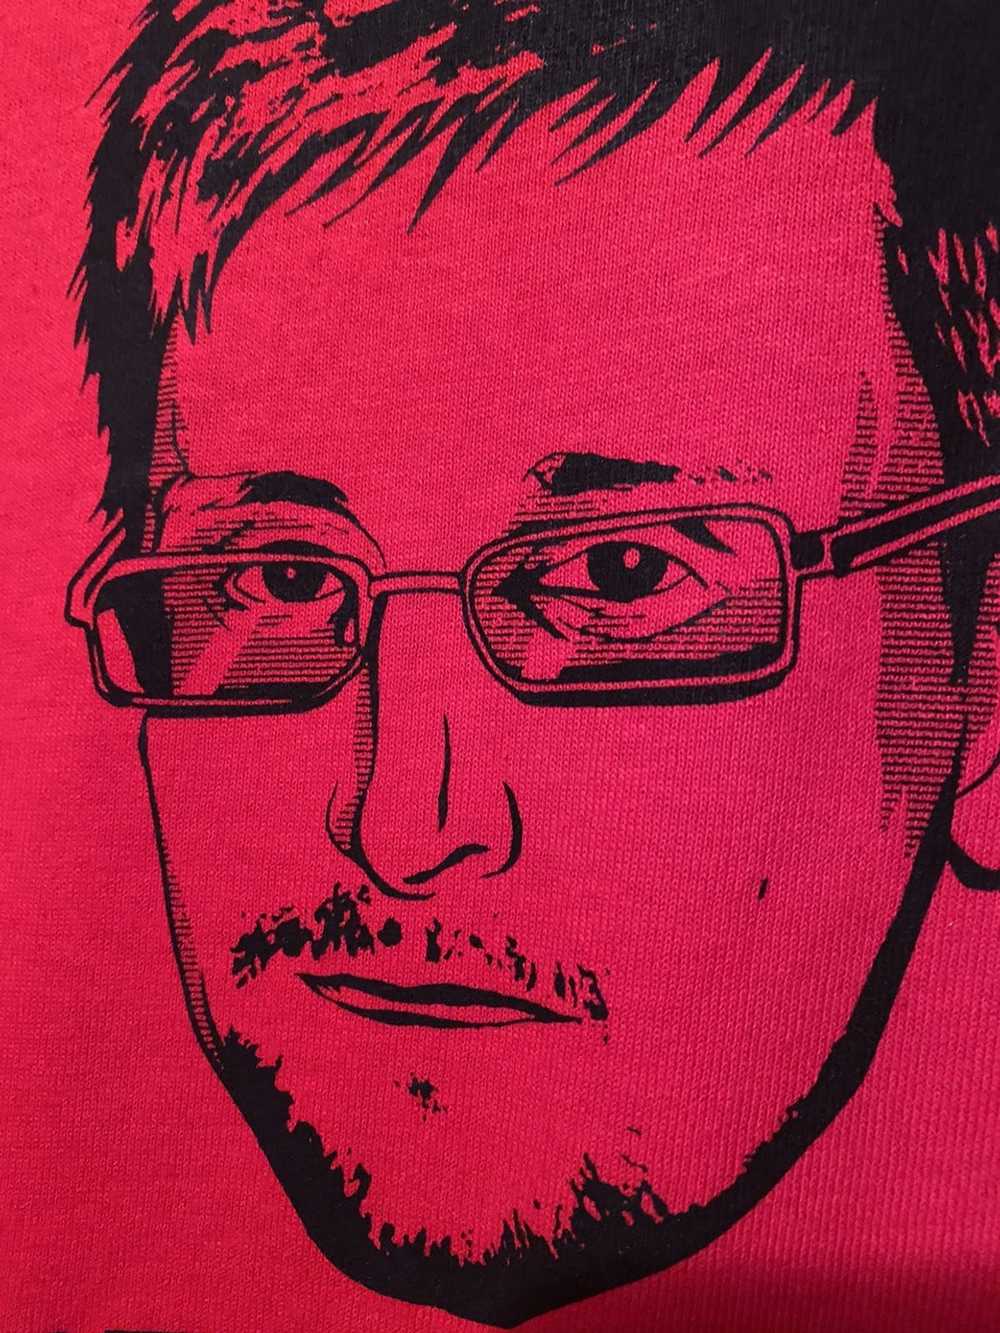 Vintage Edward Snowden Tee - image 3